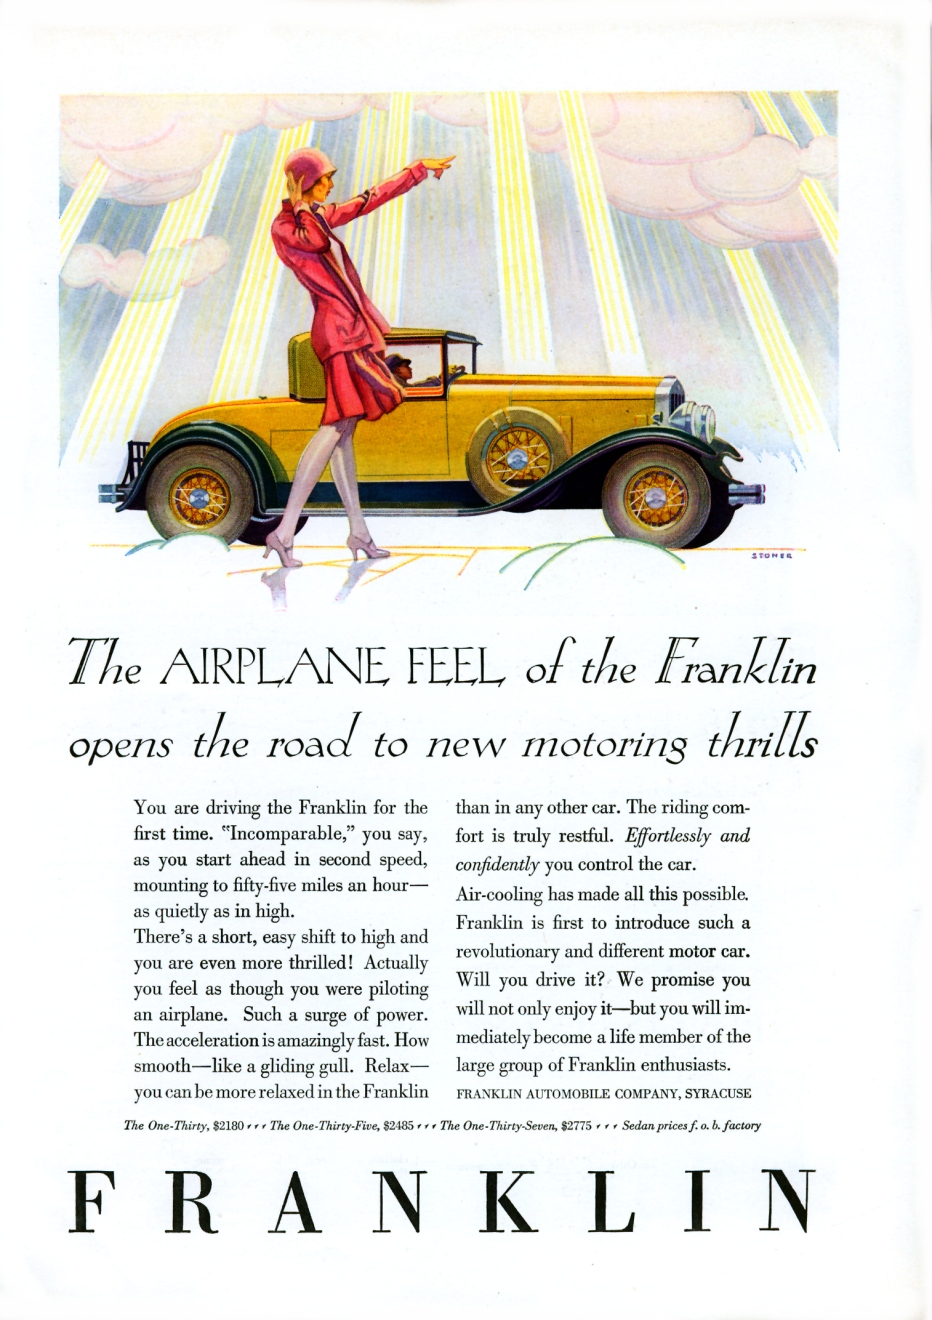 1929 Franklin Auto Advertising